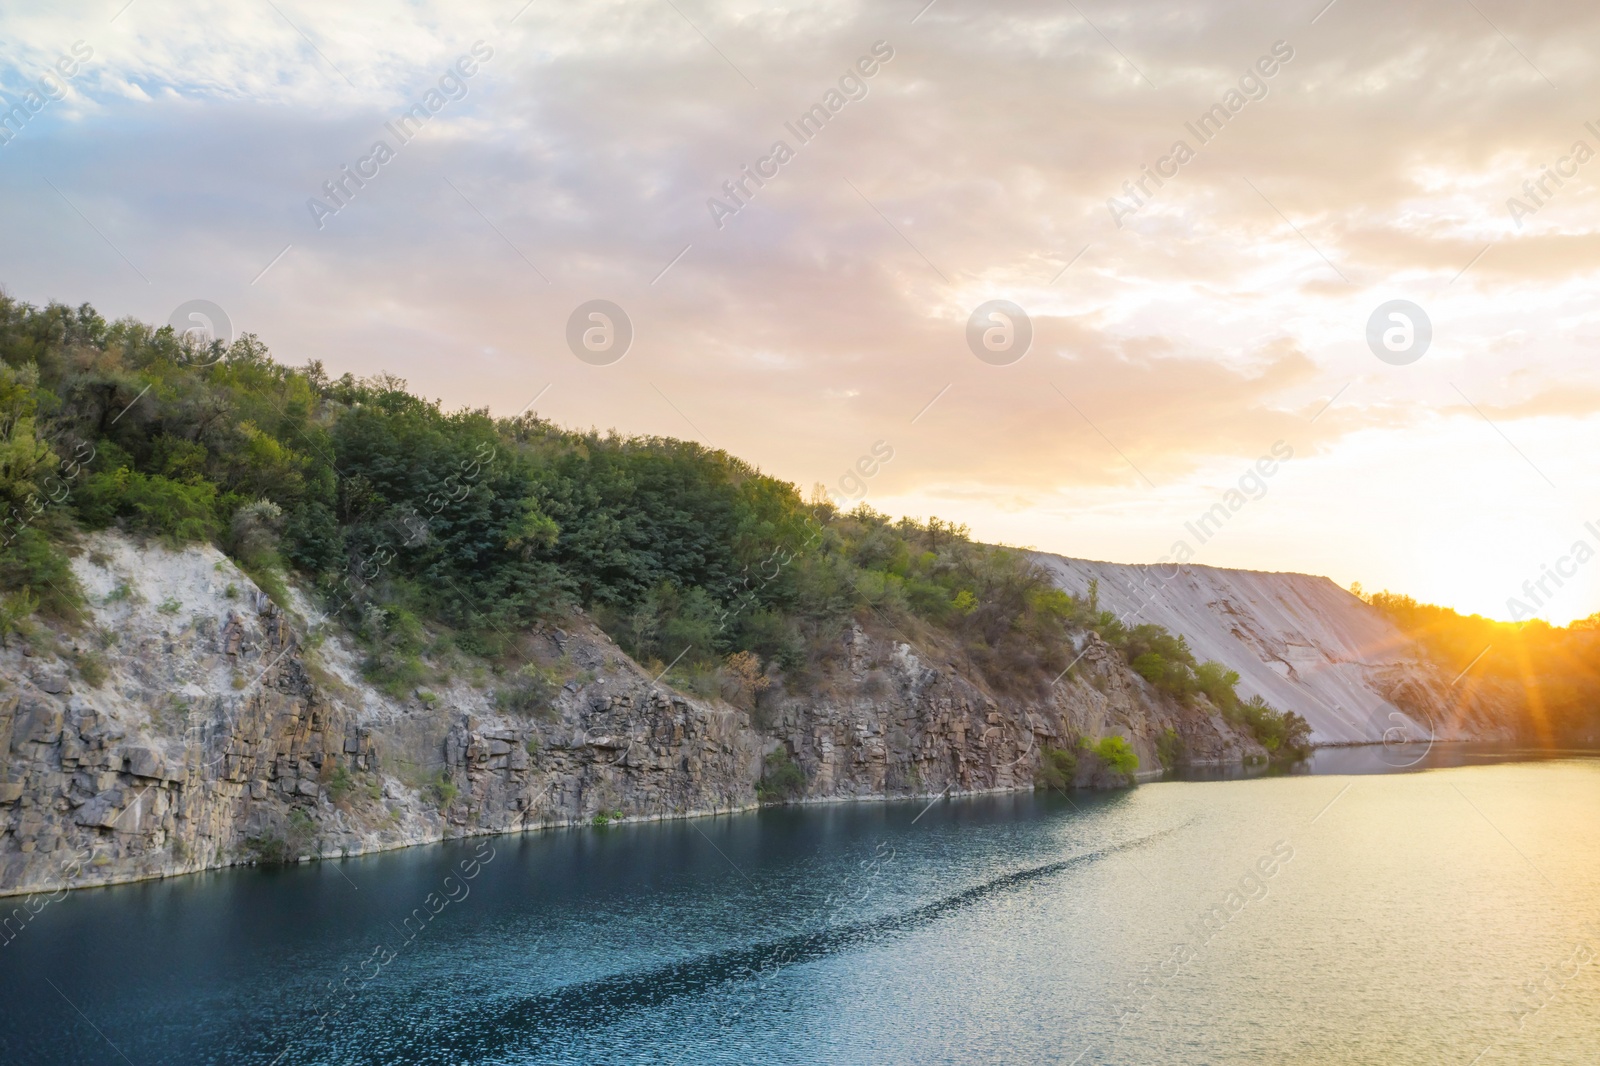 Image of Beautiful blue lake with granite banks at sunset